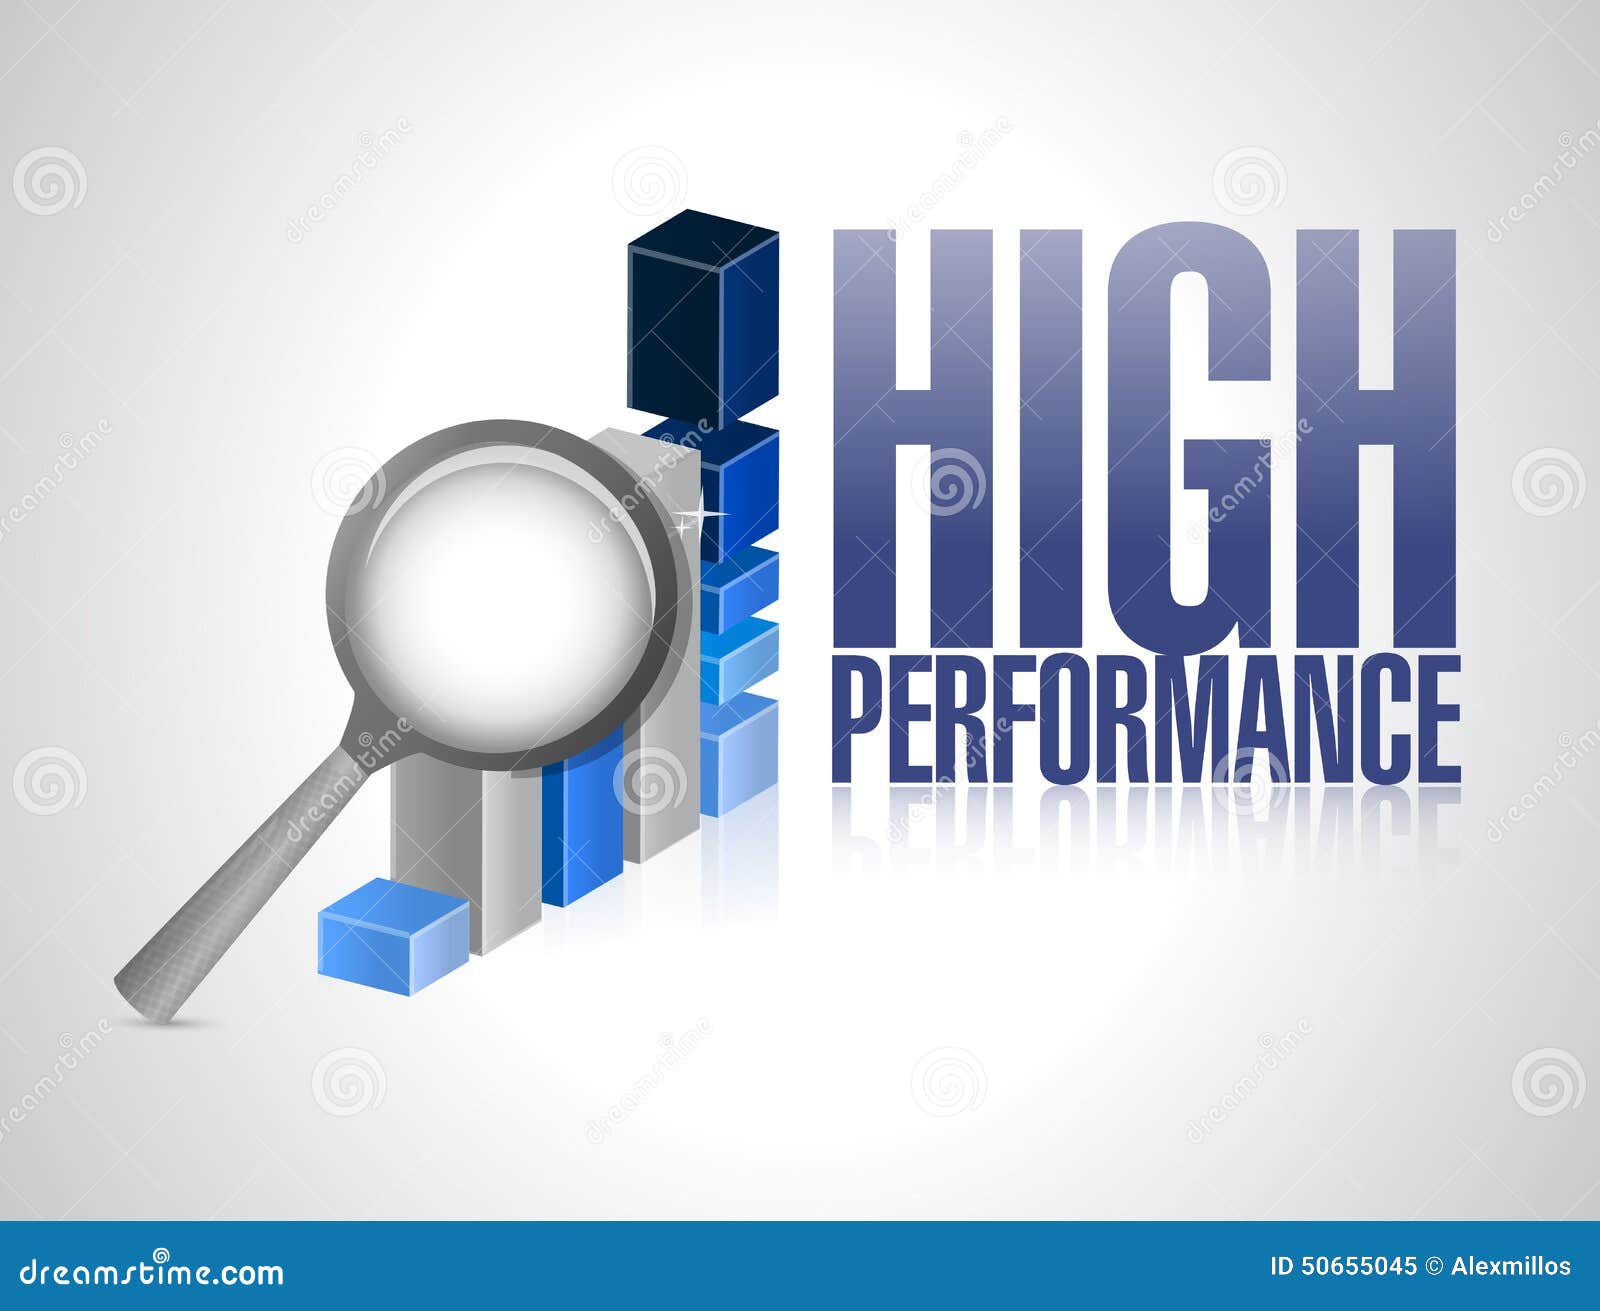 High Performance Chart